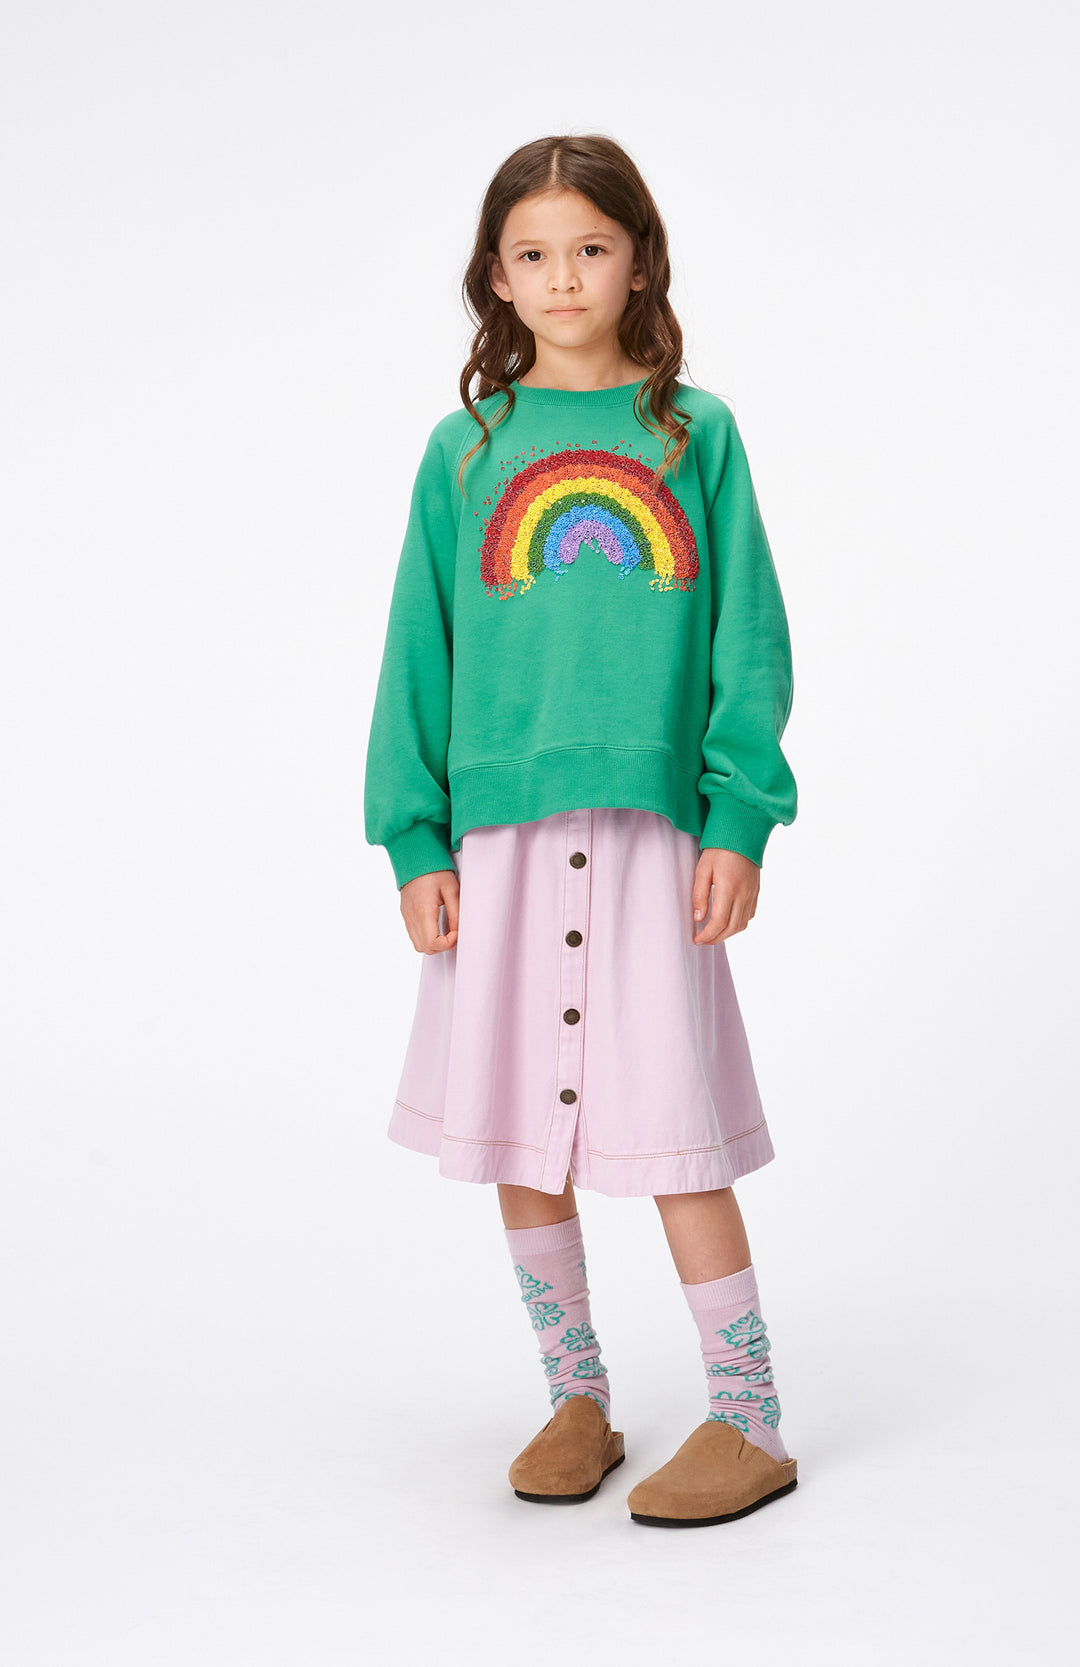 marilee green rainbow sweatshirt by molo